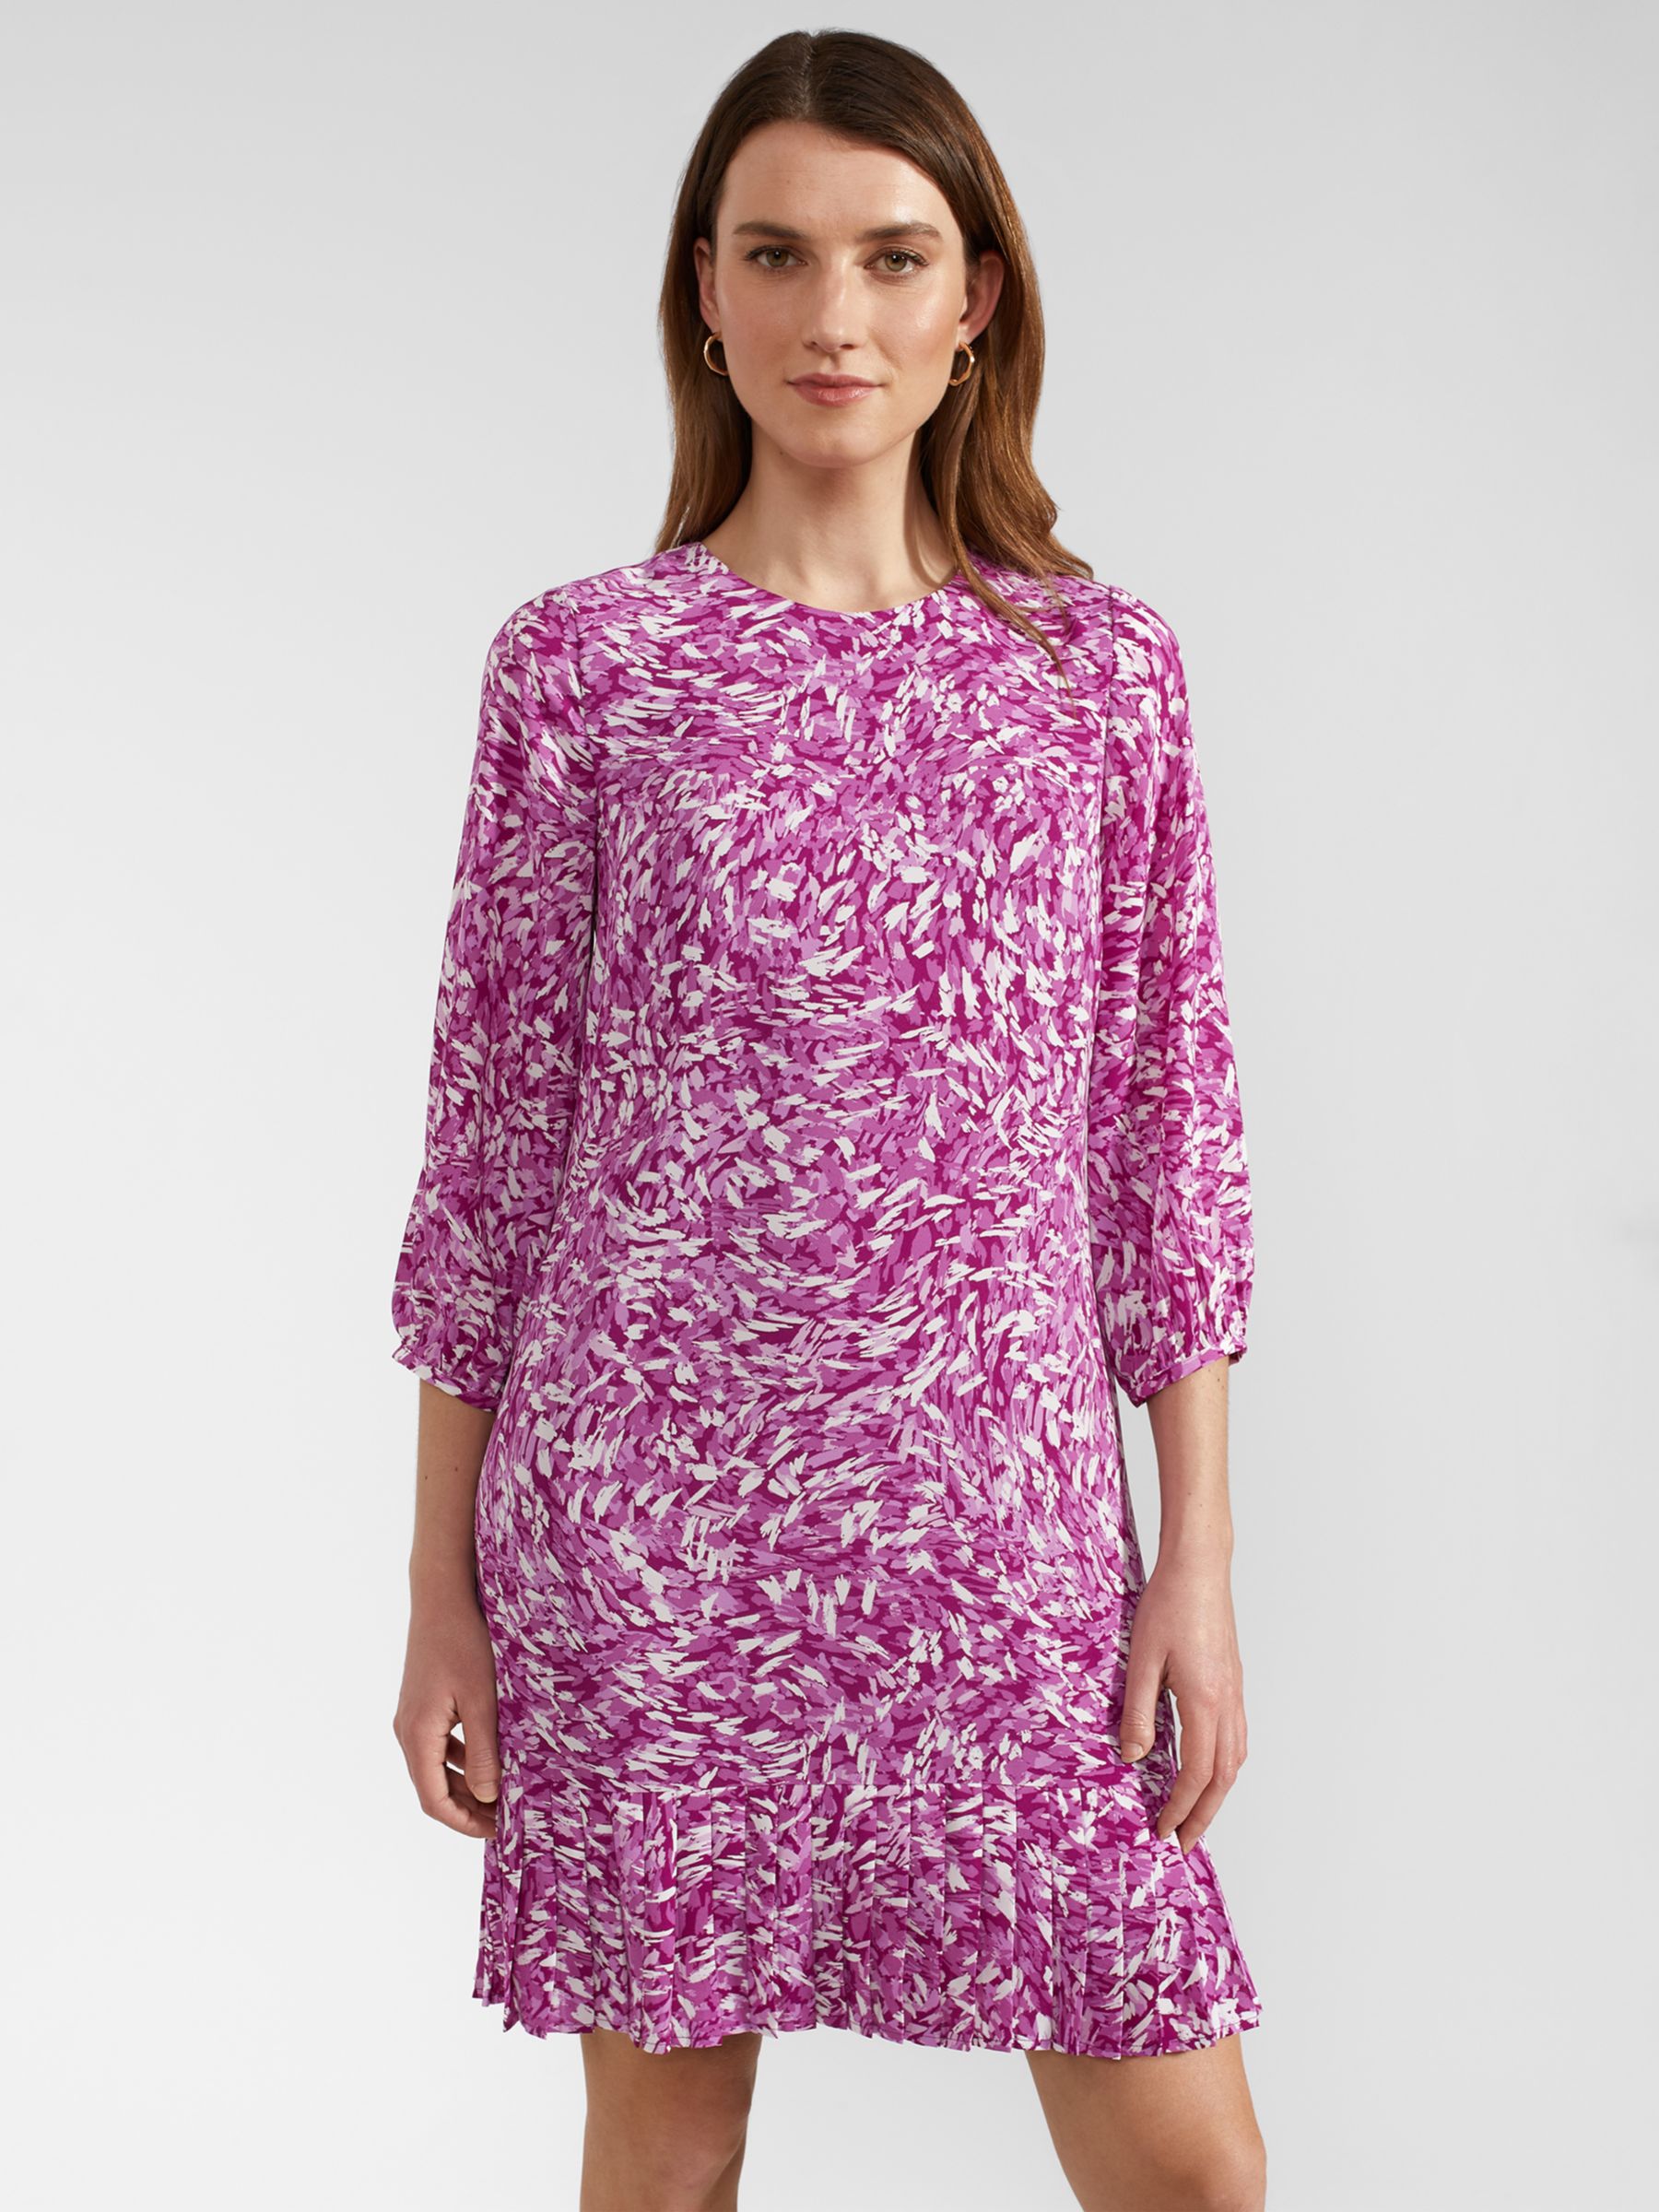 Hobbs Petite Liana Abstract Print Dress, Purple/Multi, 10